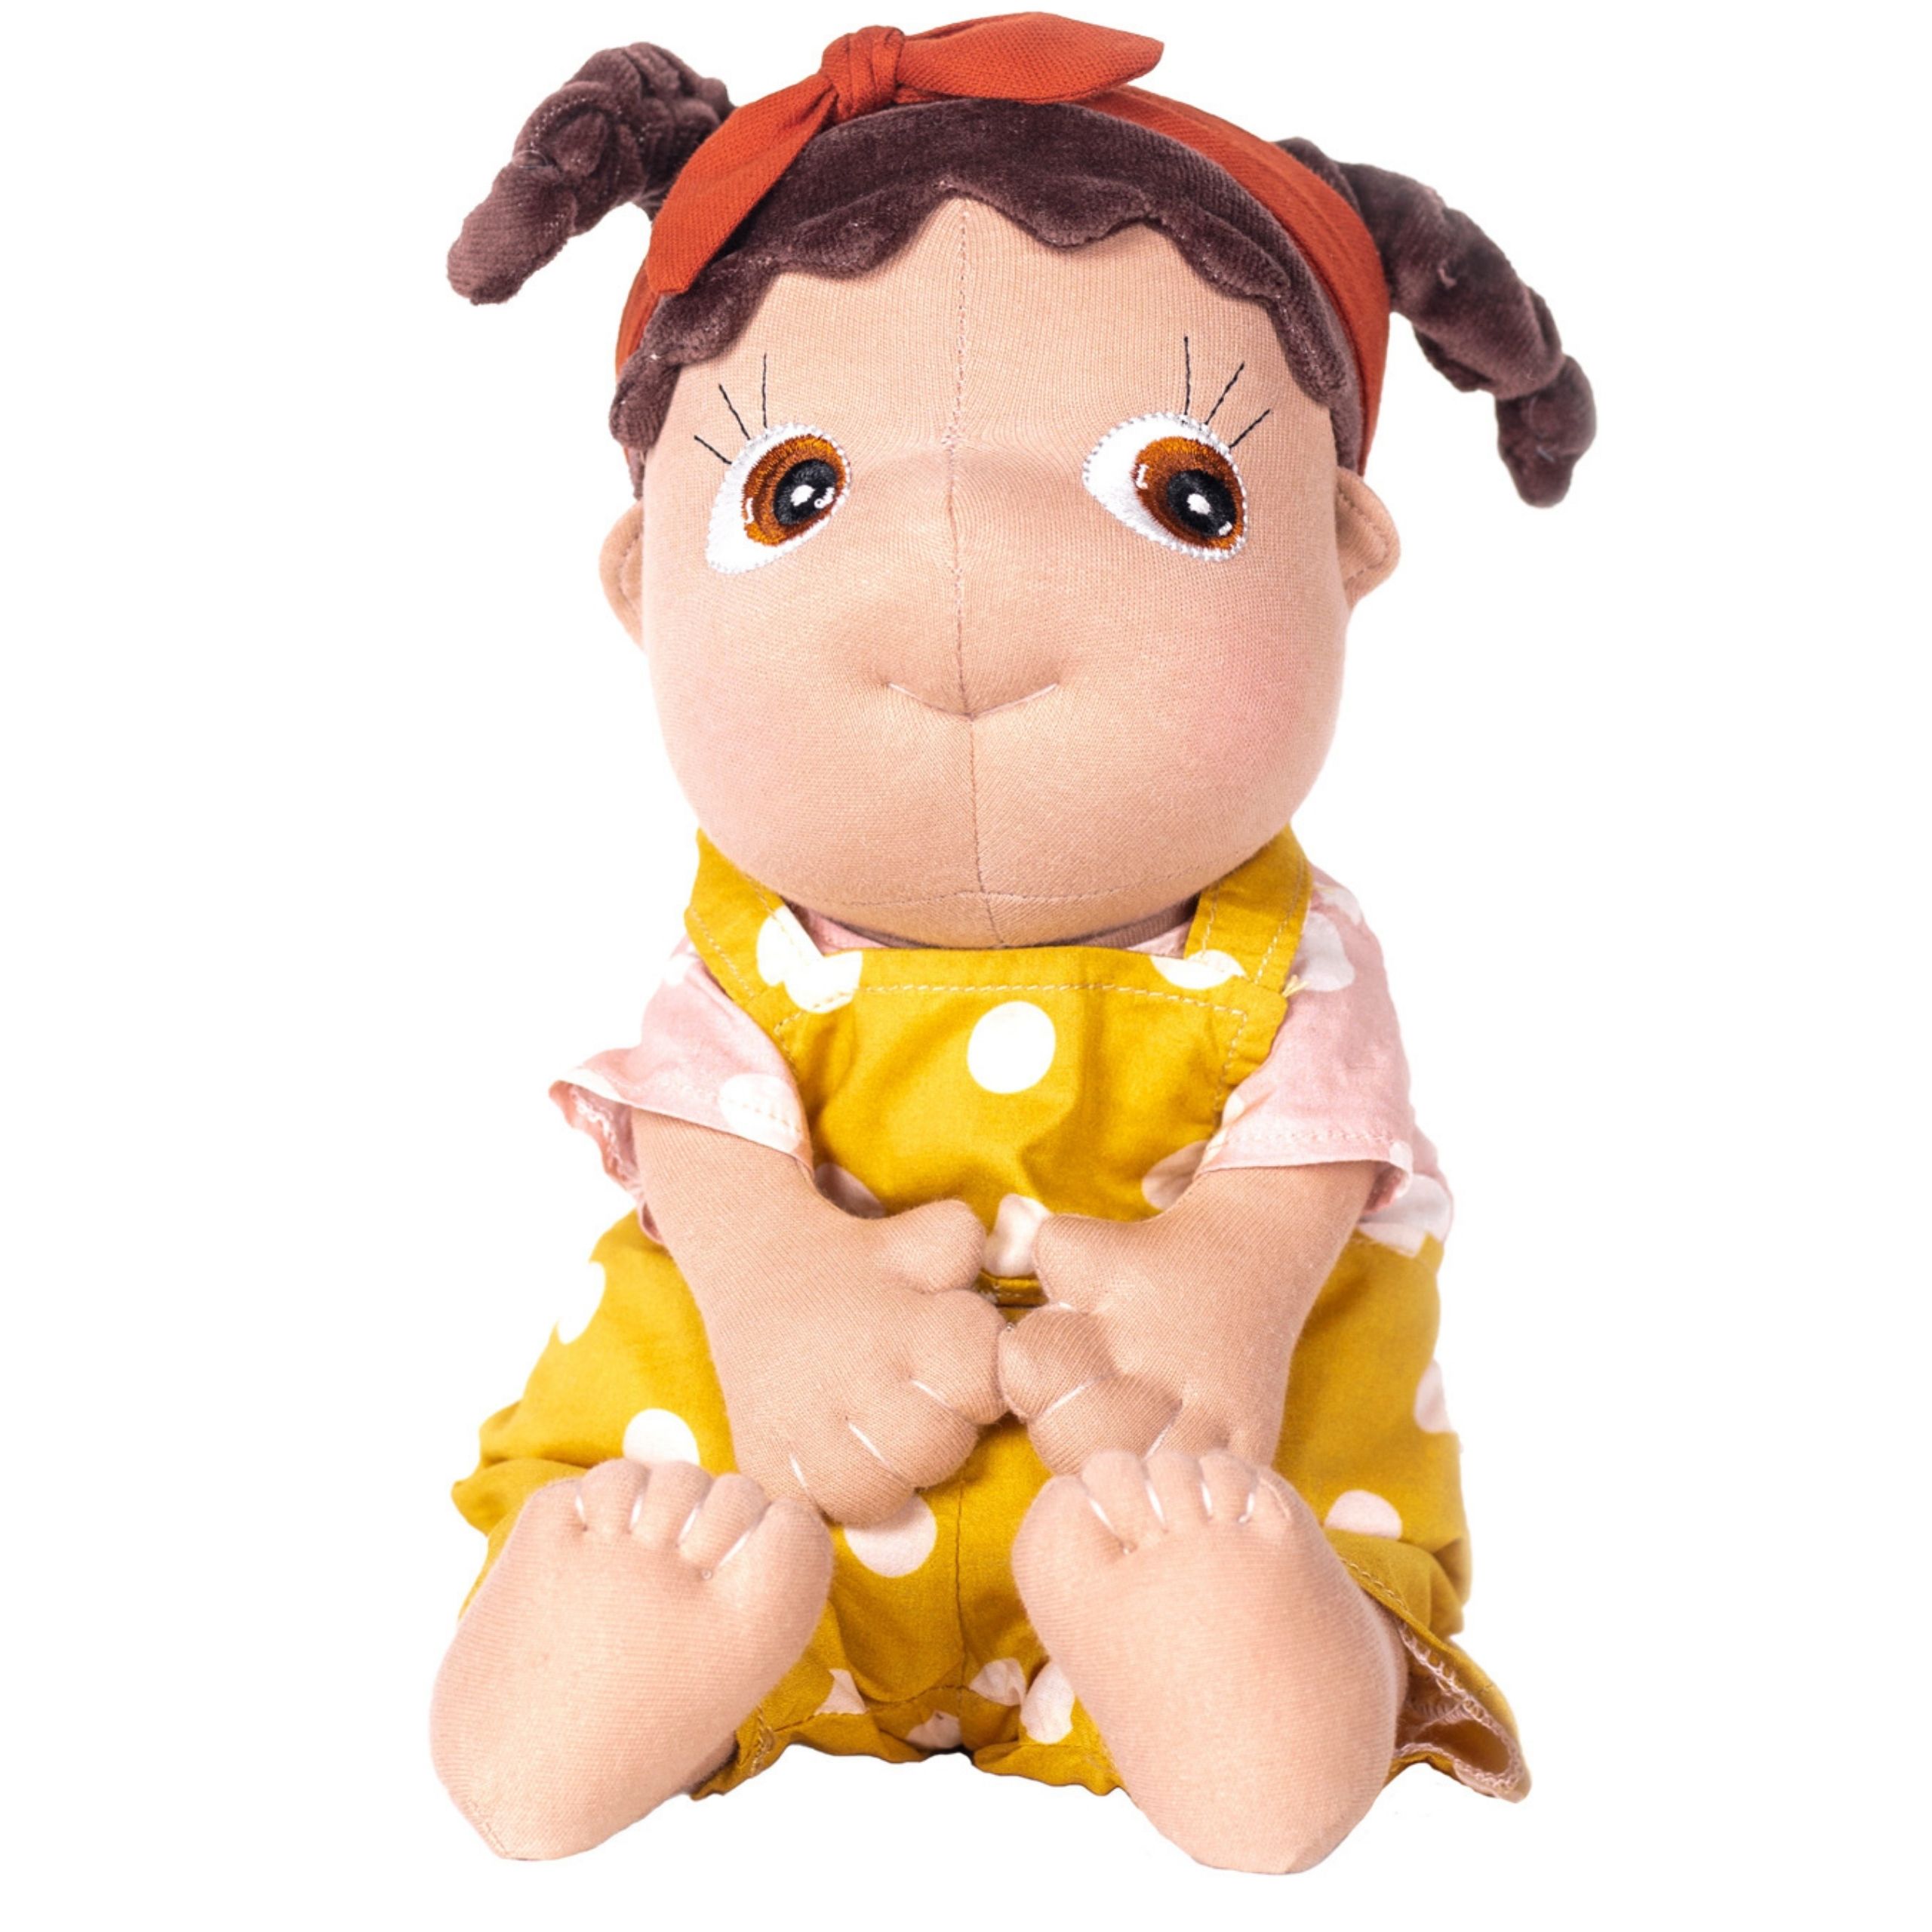 Soft dolls rubens barn soft doll with wheat bag lumi tummies